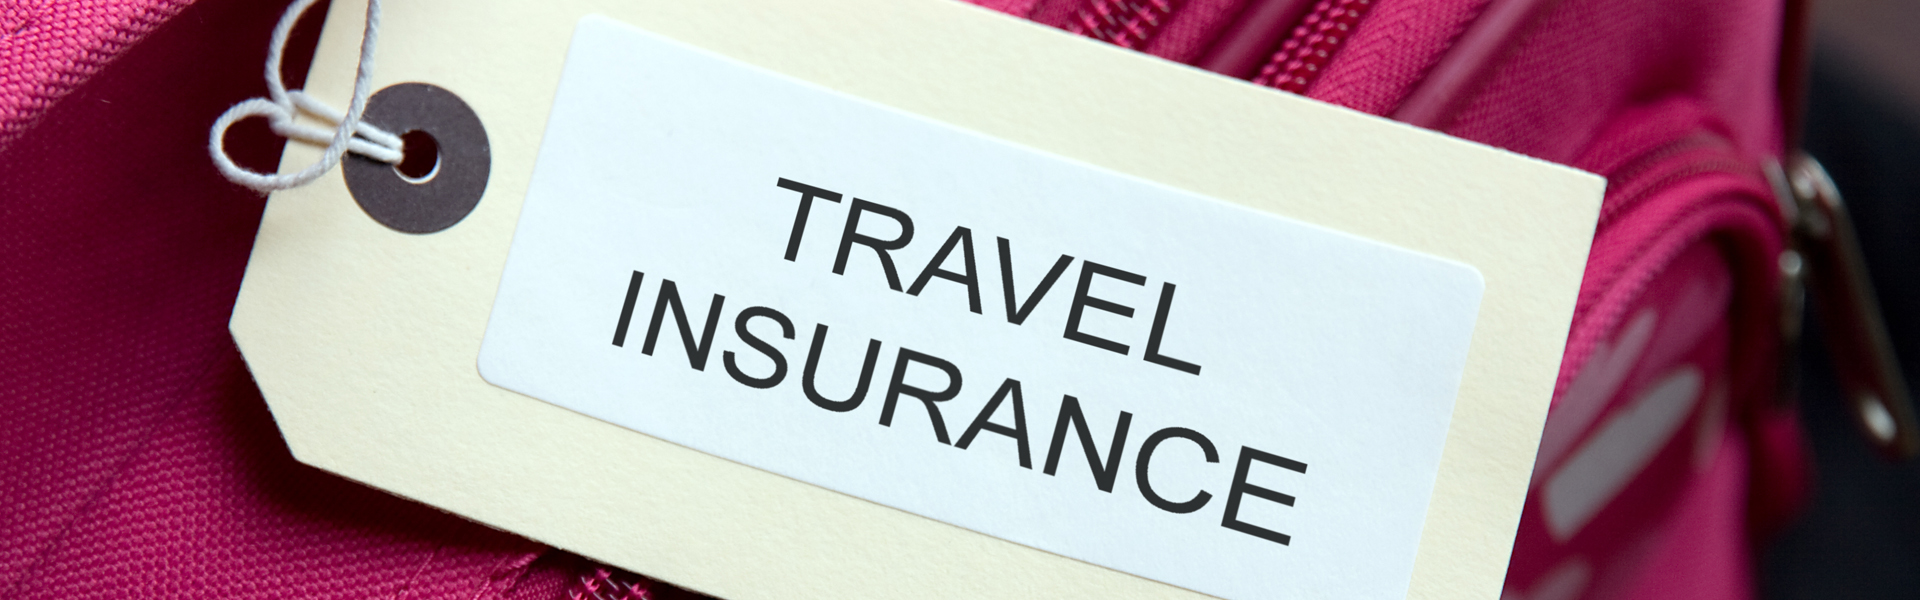 Flights Direct New Zealand - Travel Insurance